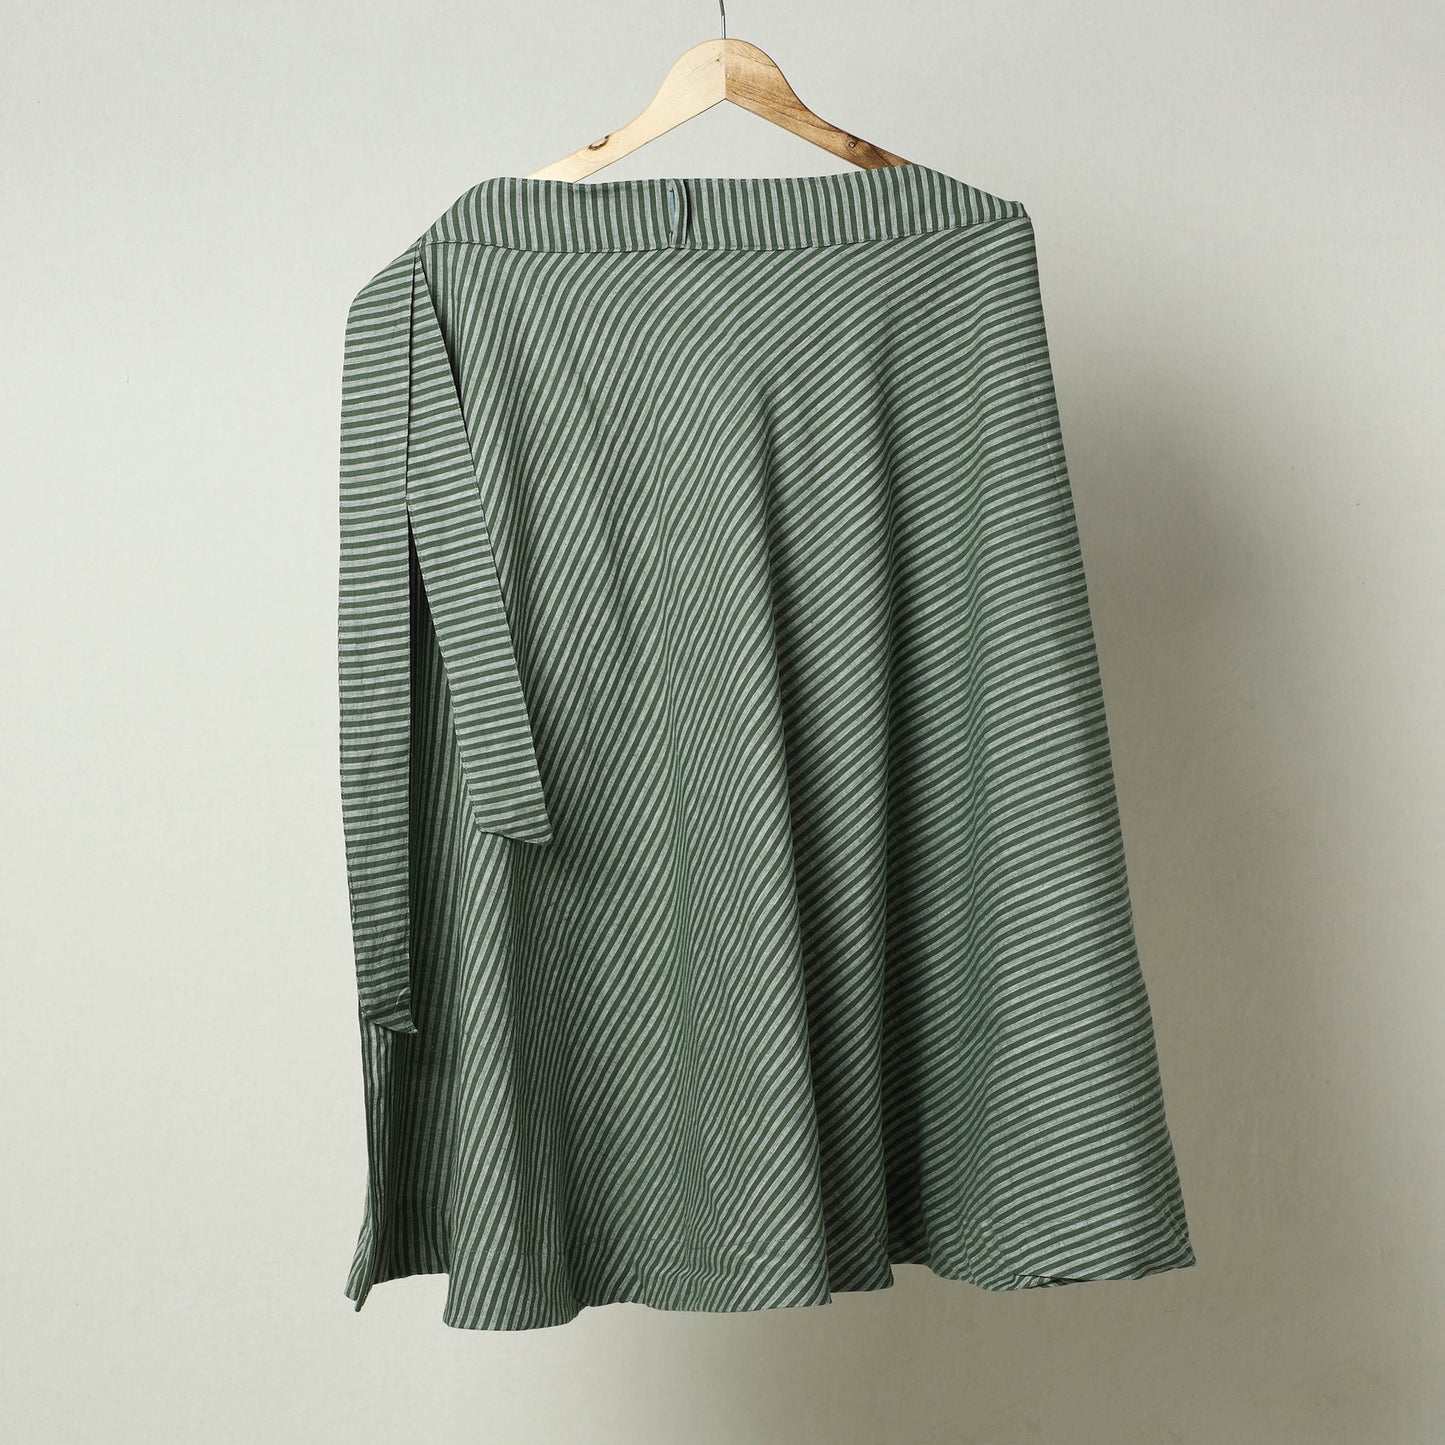 Green - Plain Handloom Jhiri Cotton Wrap Around Skirt